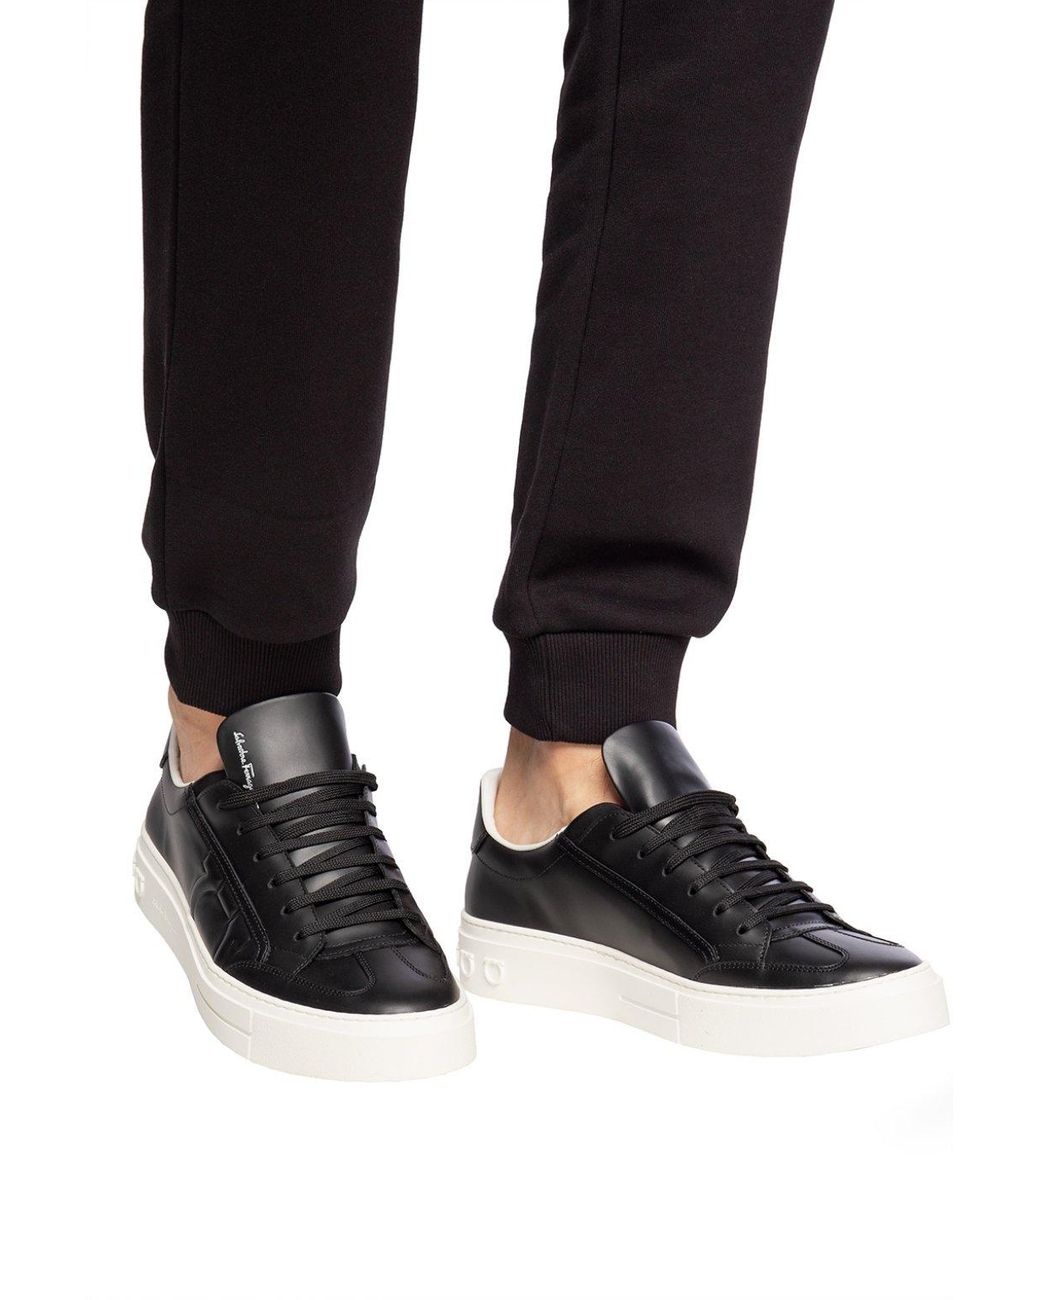 Ferragamo Leather 'borg' Sneakers in Black for Men - Lyst